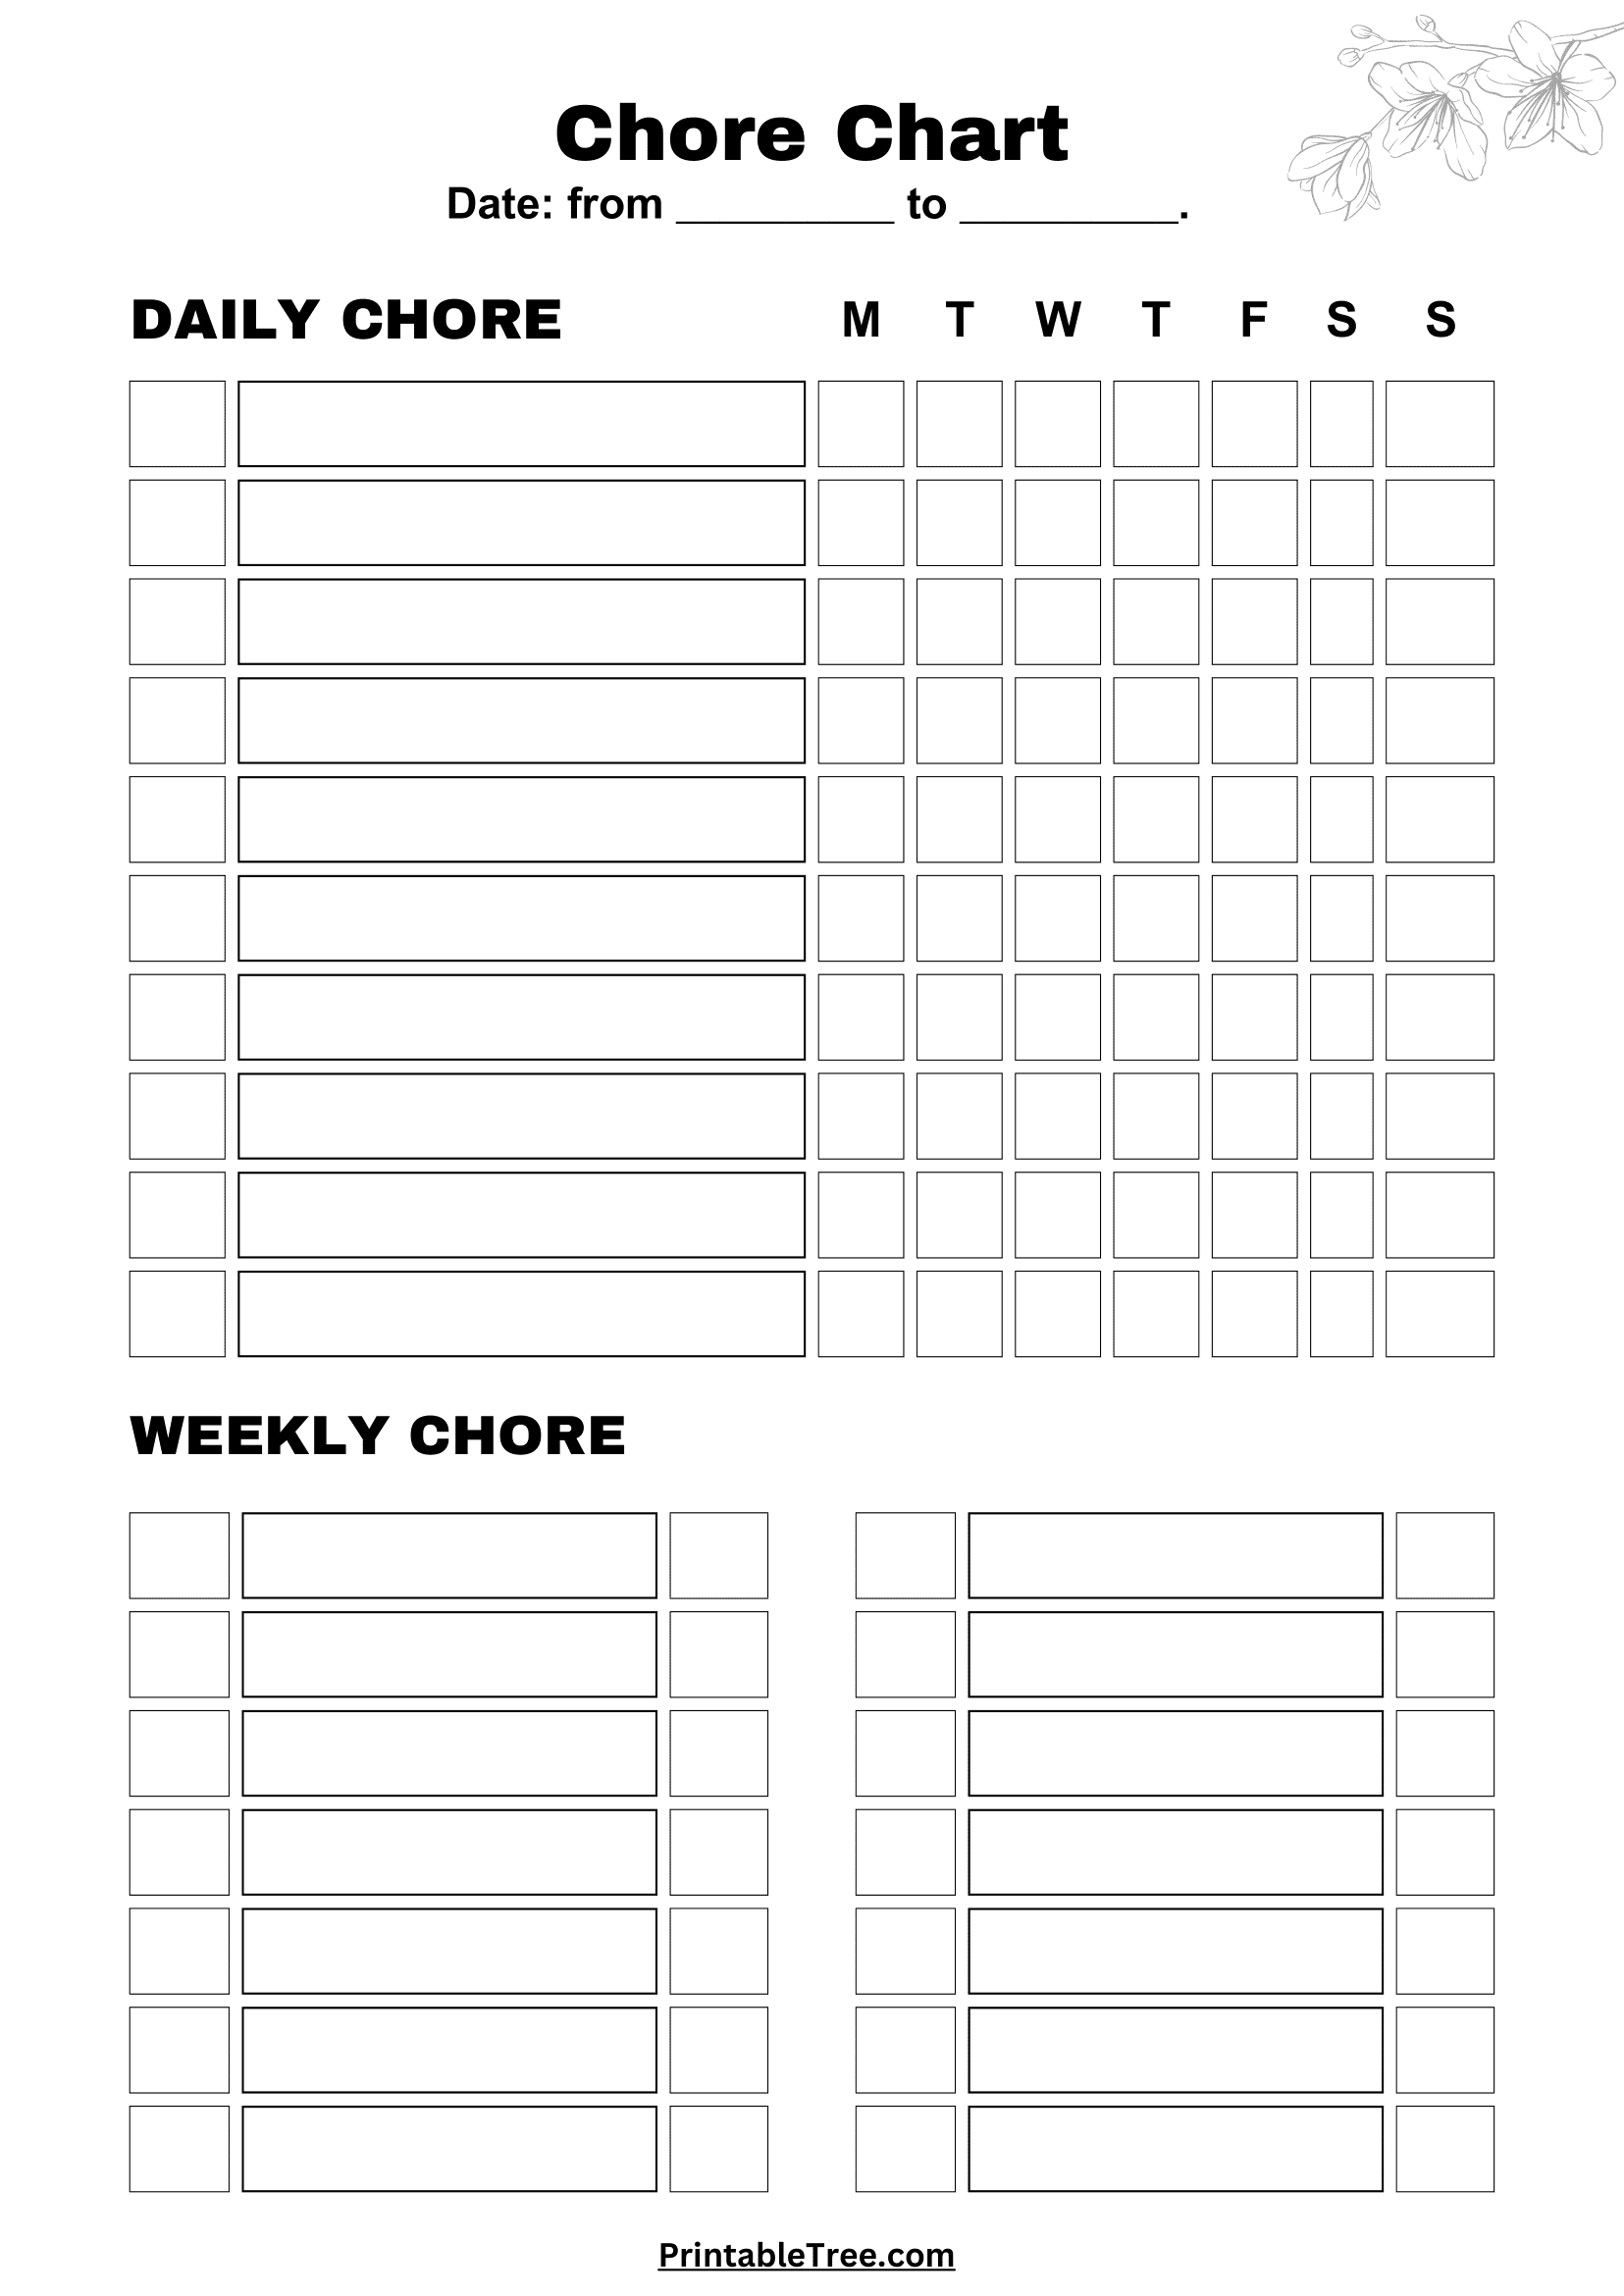 Free Printable Chore Chart PDF Template For Kids - Free Printable Chore List